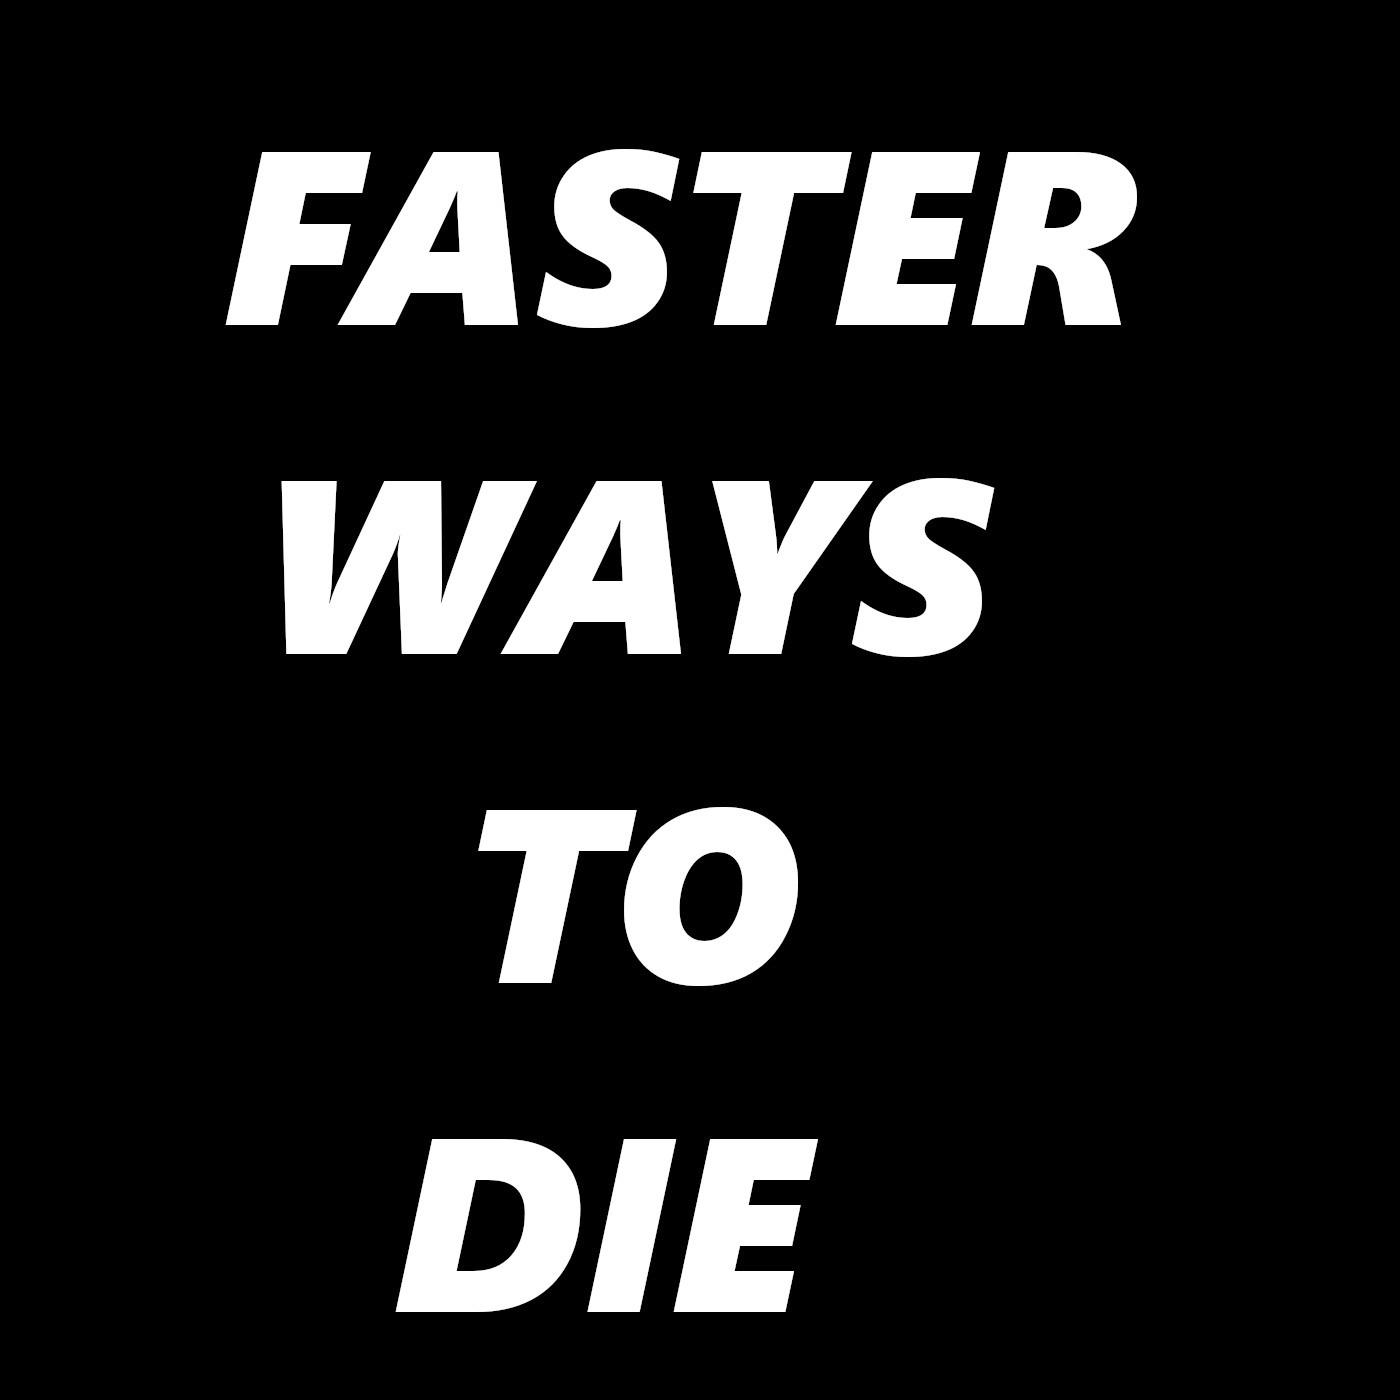 faster ways to die